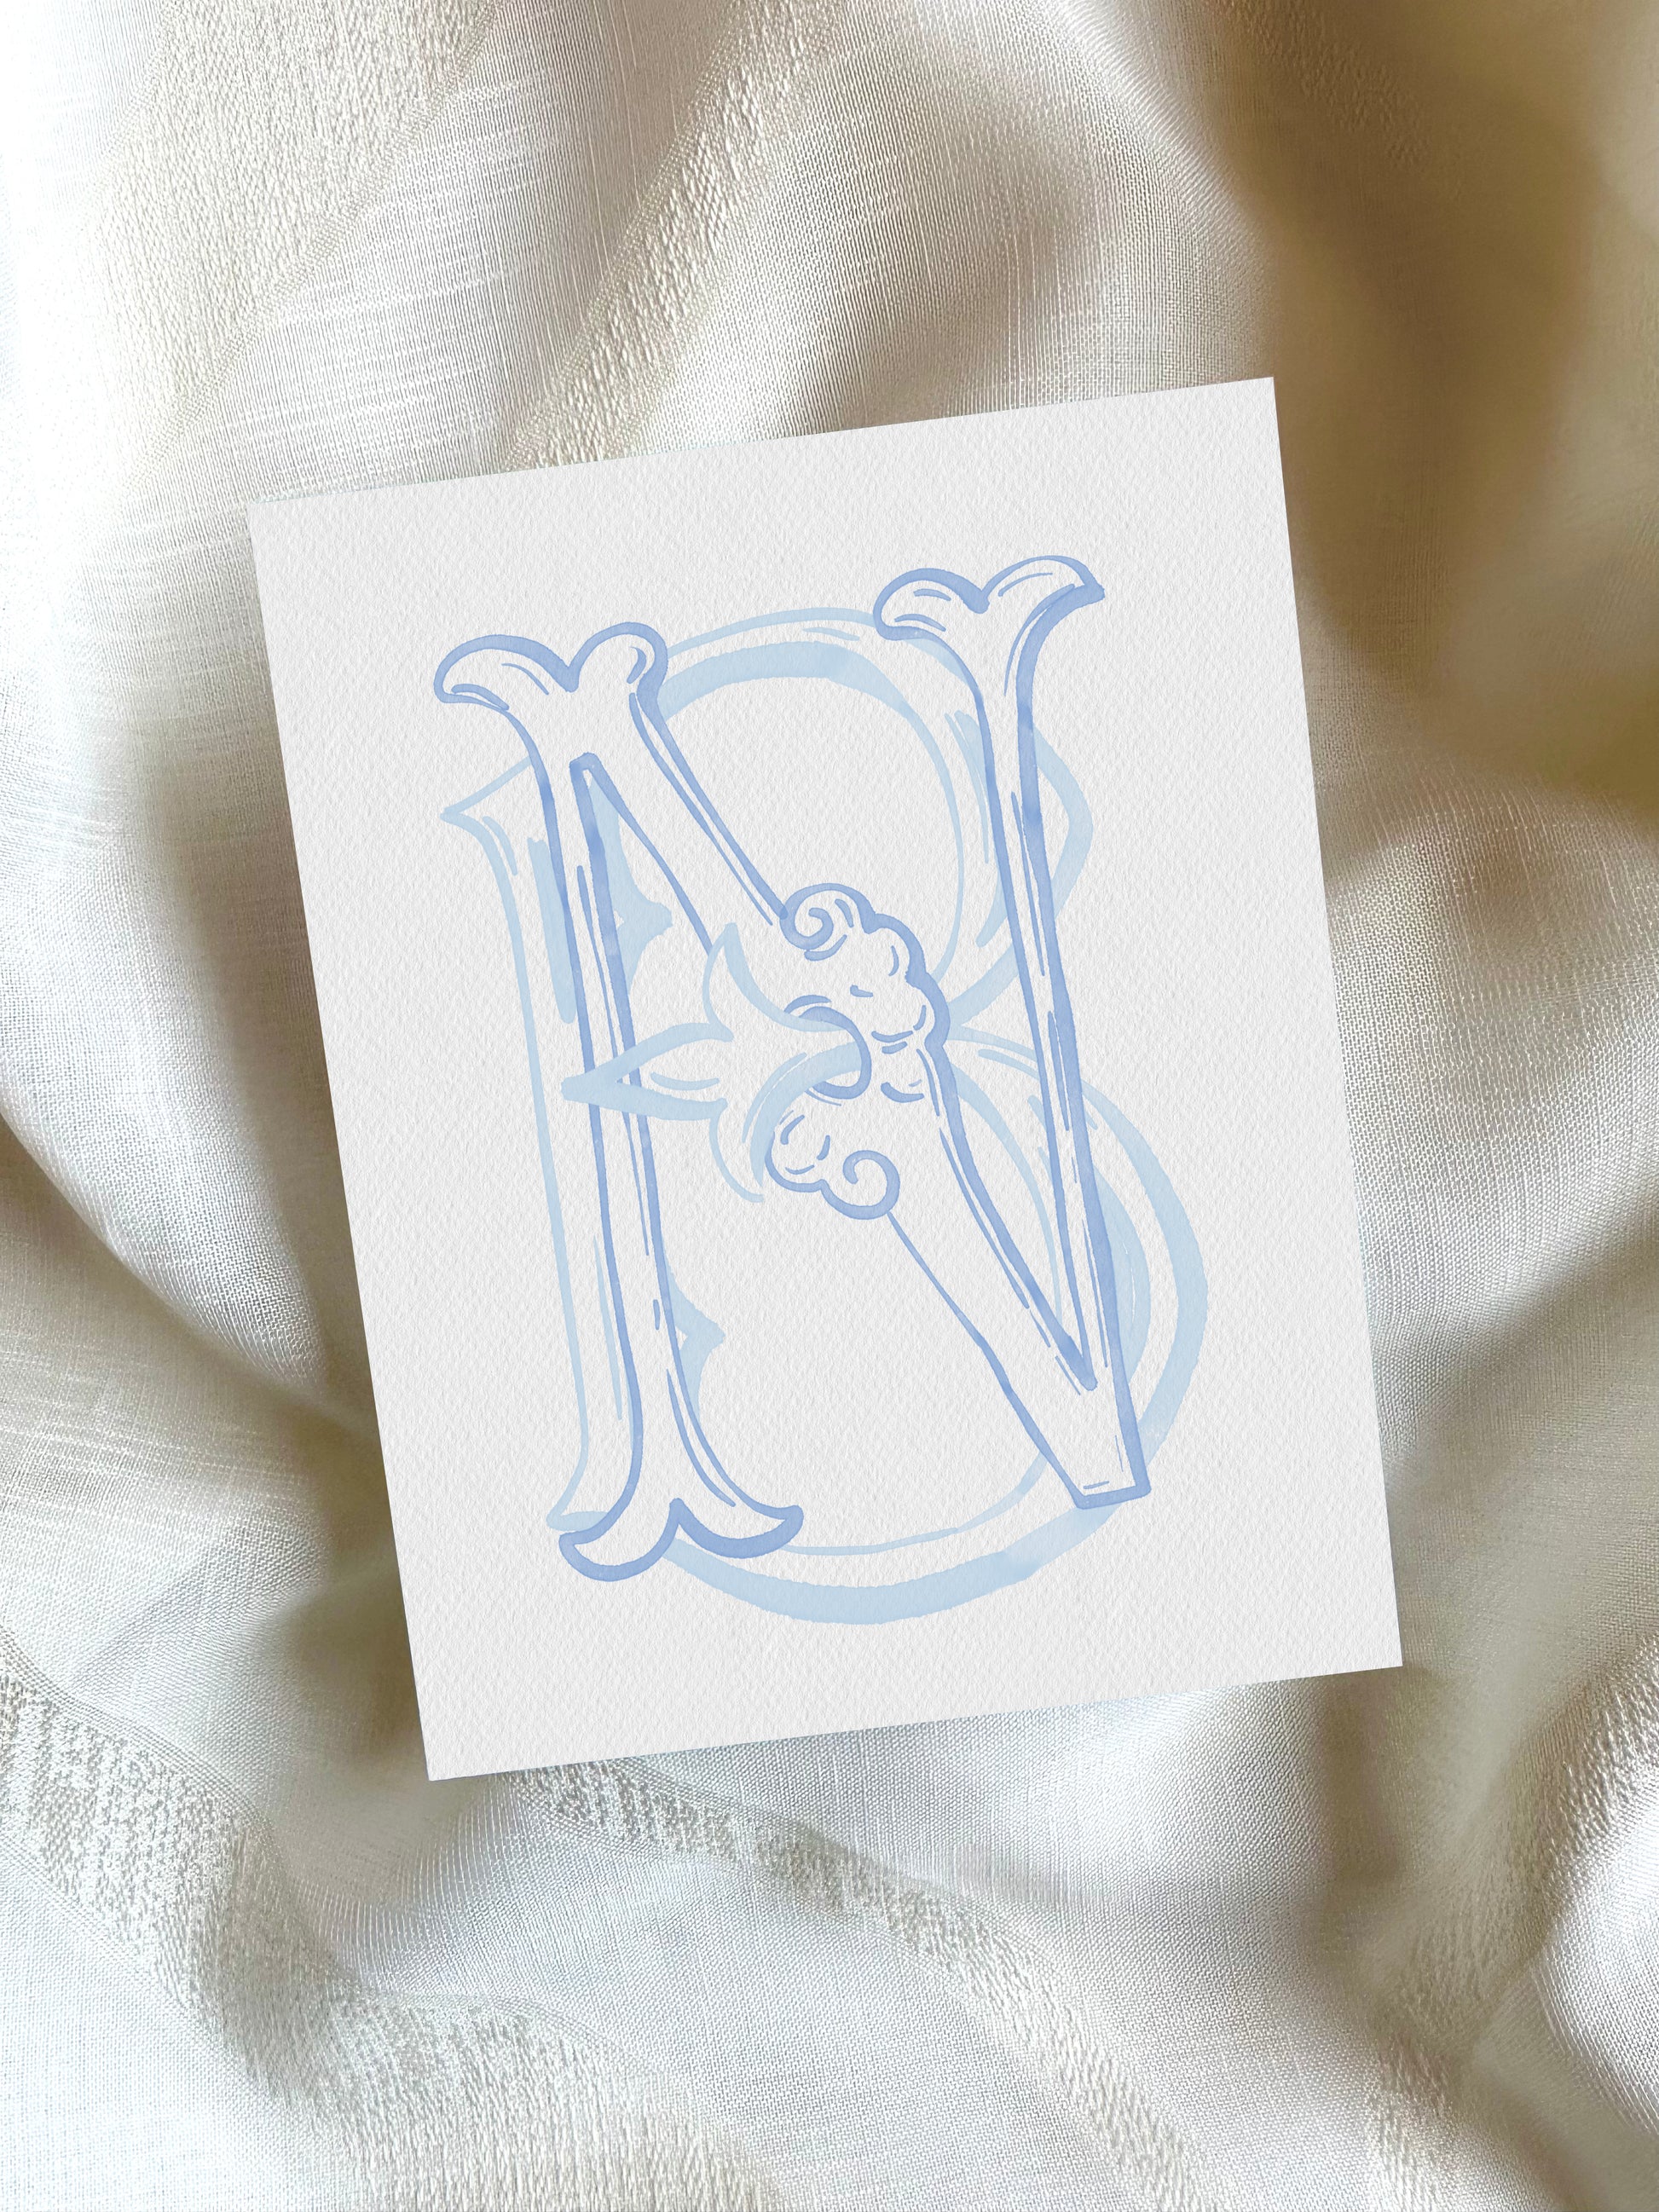 2 Letter Monogram with Letters BN NB | Digital Download - Wedding Monogram SVG, Personal Logo, Wedding Logo for Wedding Invitations The Wedding Crest Lab